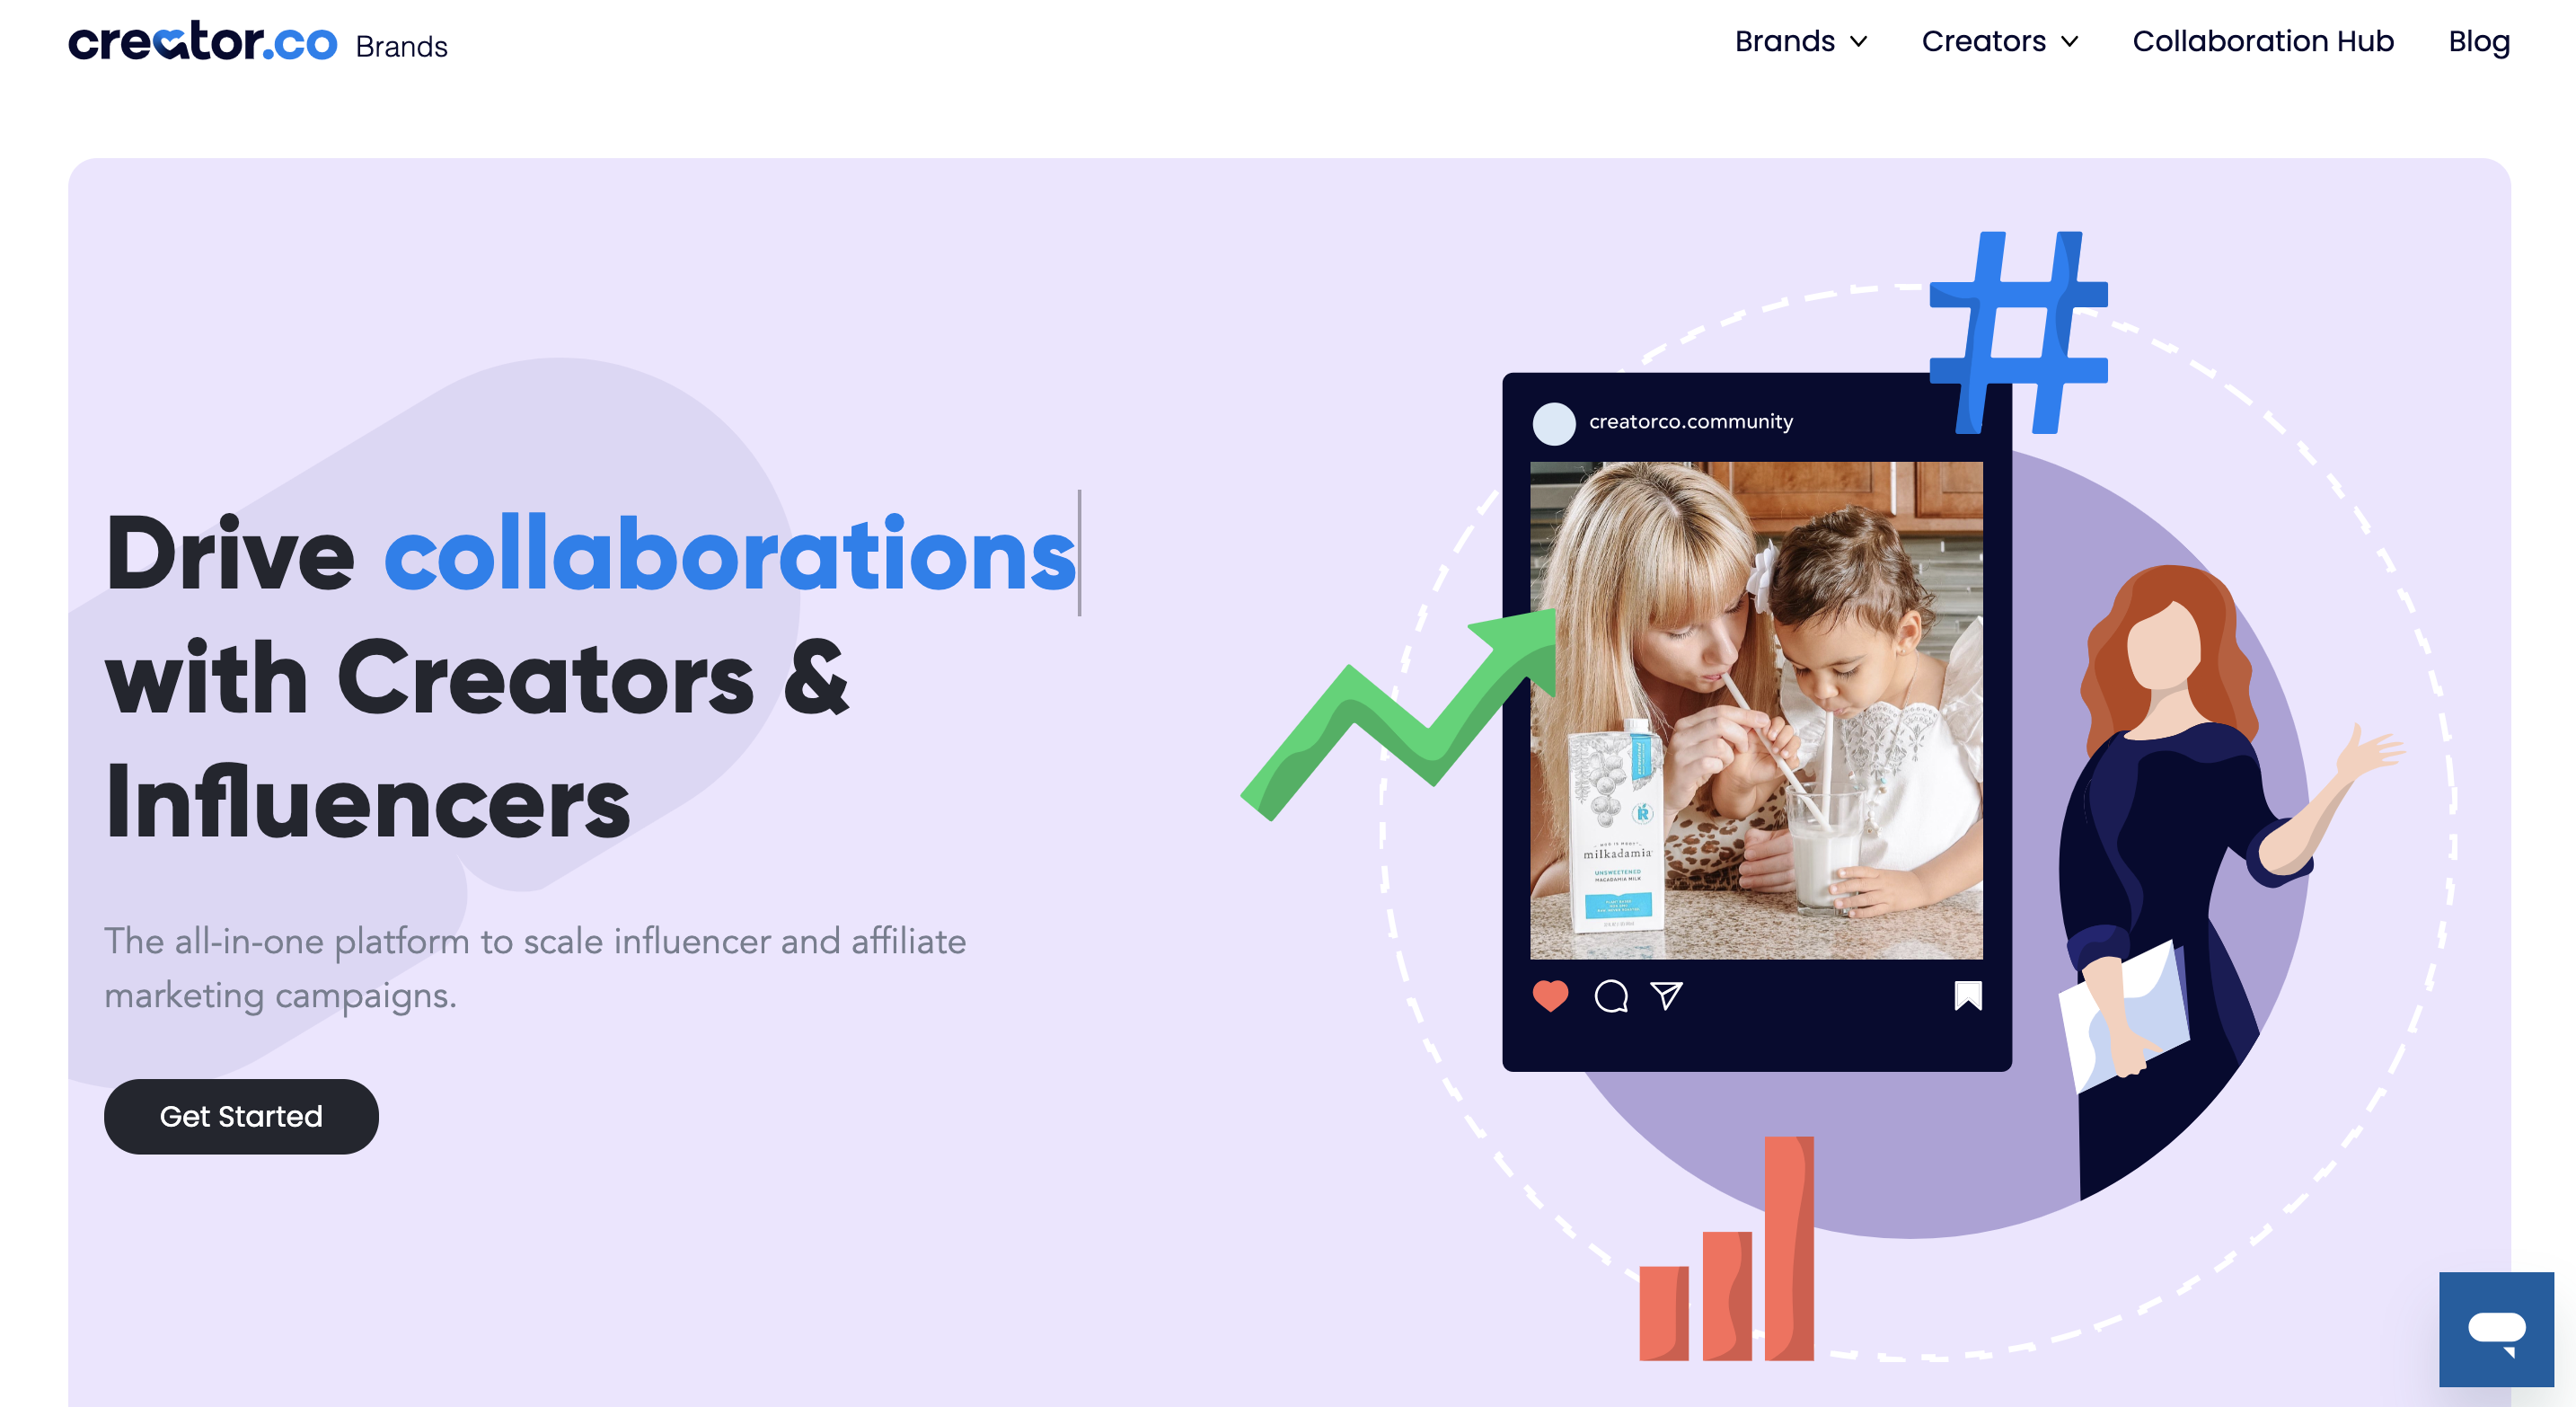 A screenshot of influencer marketing platform Creator.co's website